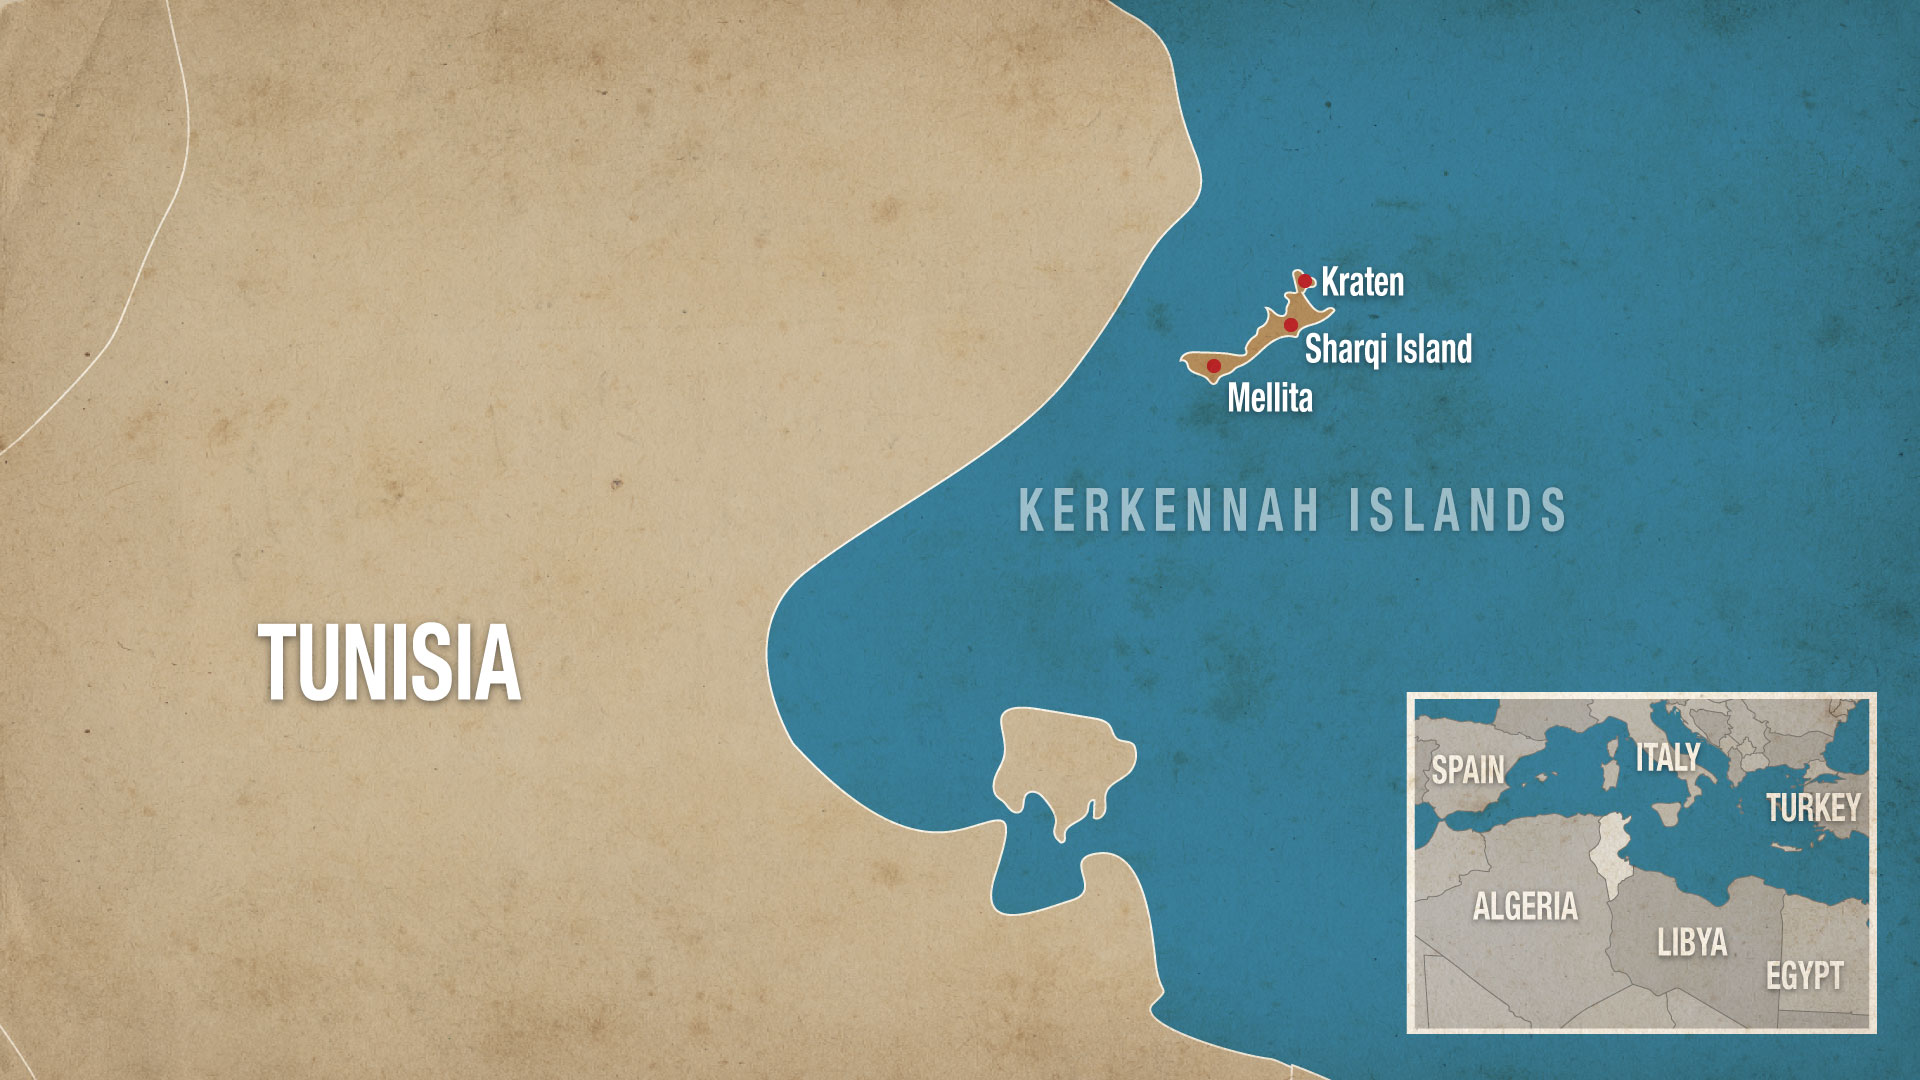 MAP-Kerkennah-Islands-Tunisia.jpg